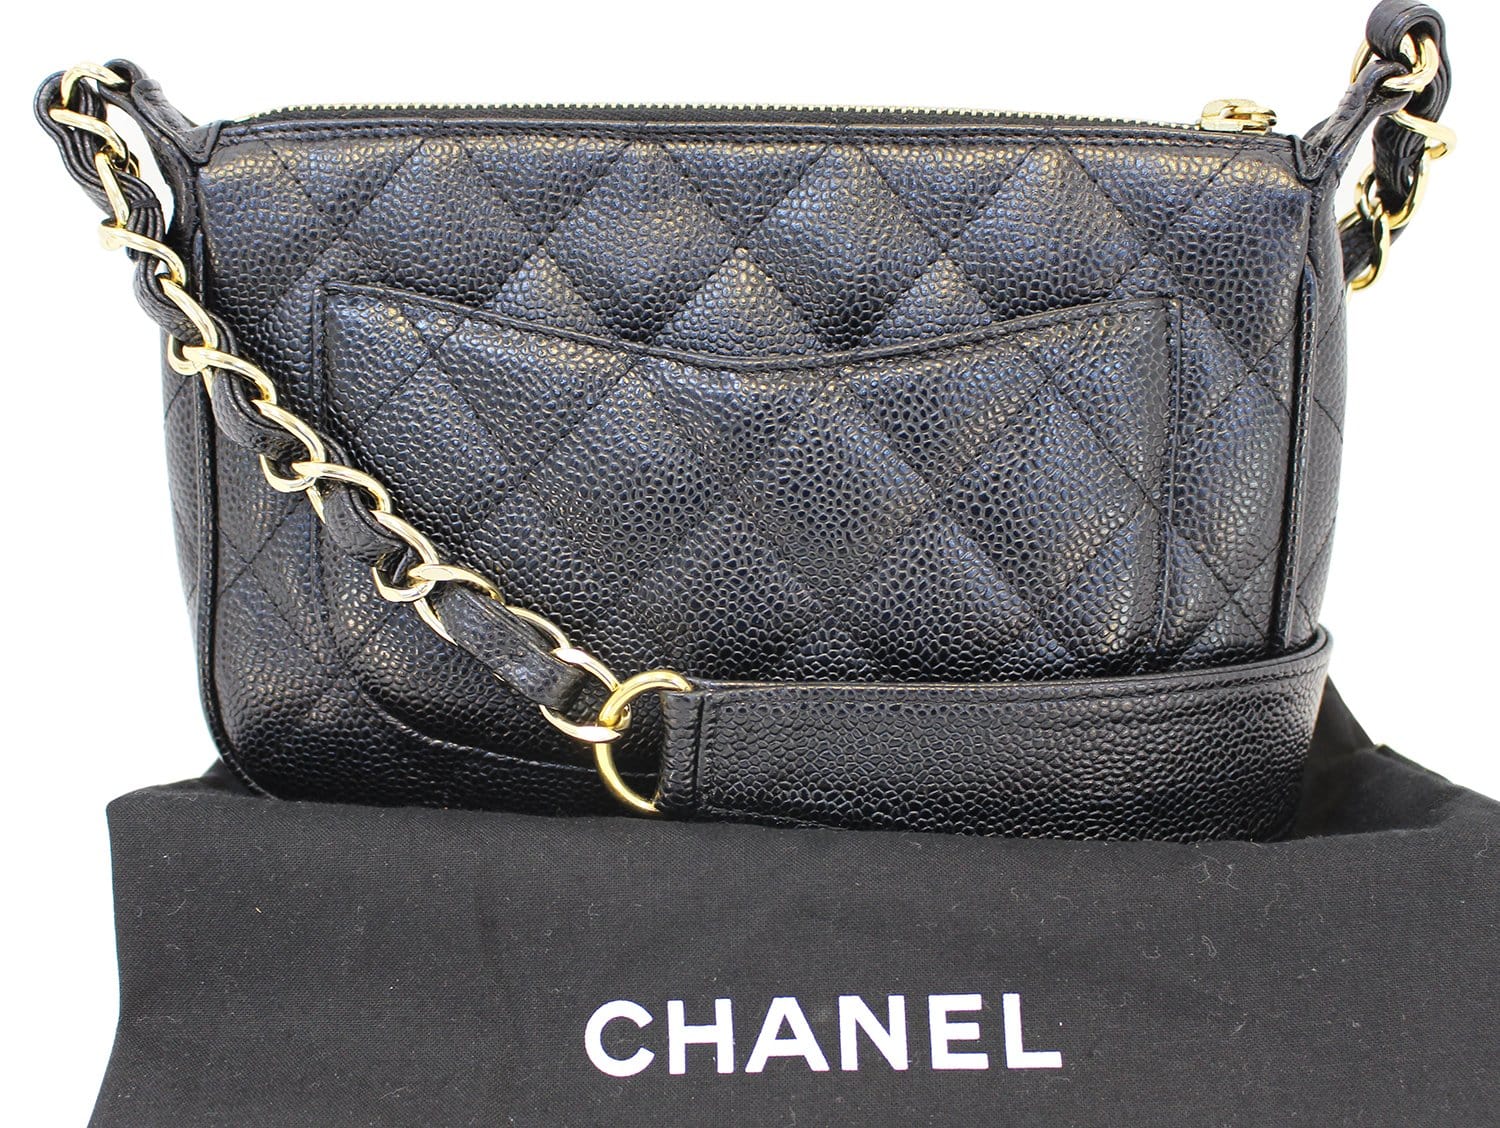 Chanel Small Heart Bag Black - Designer WishBags